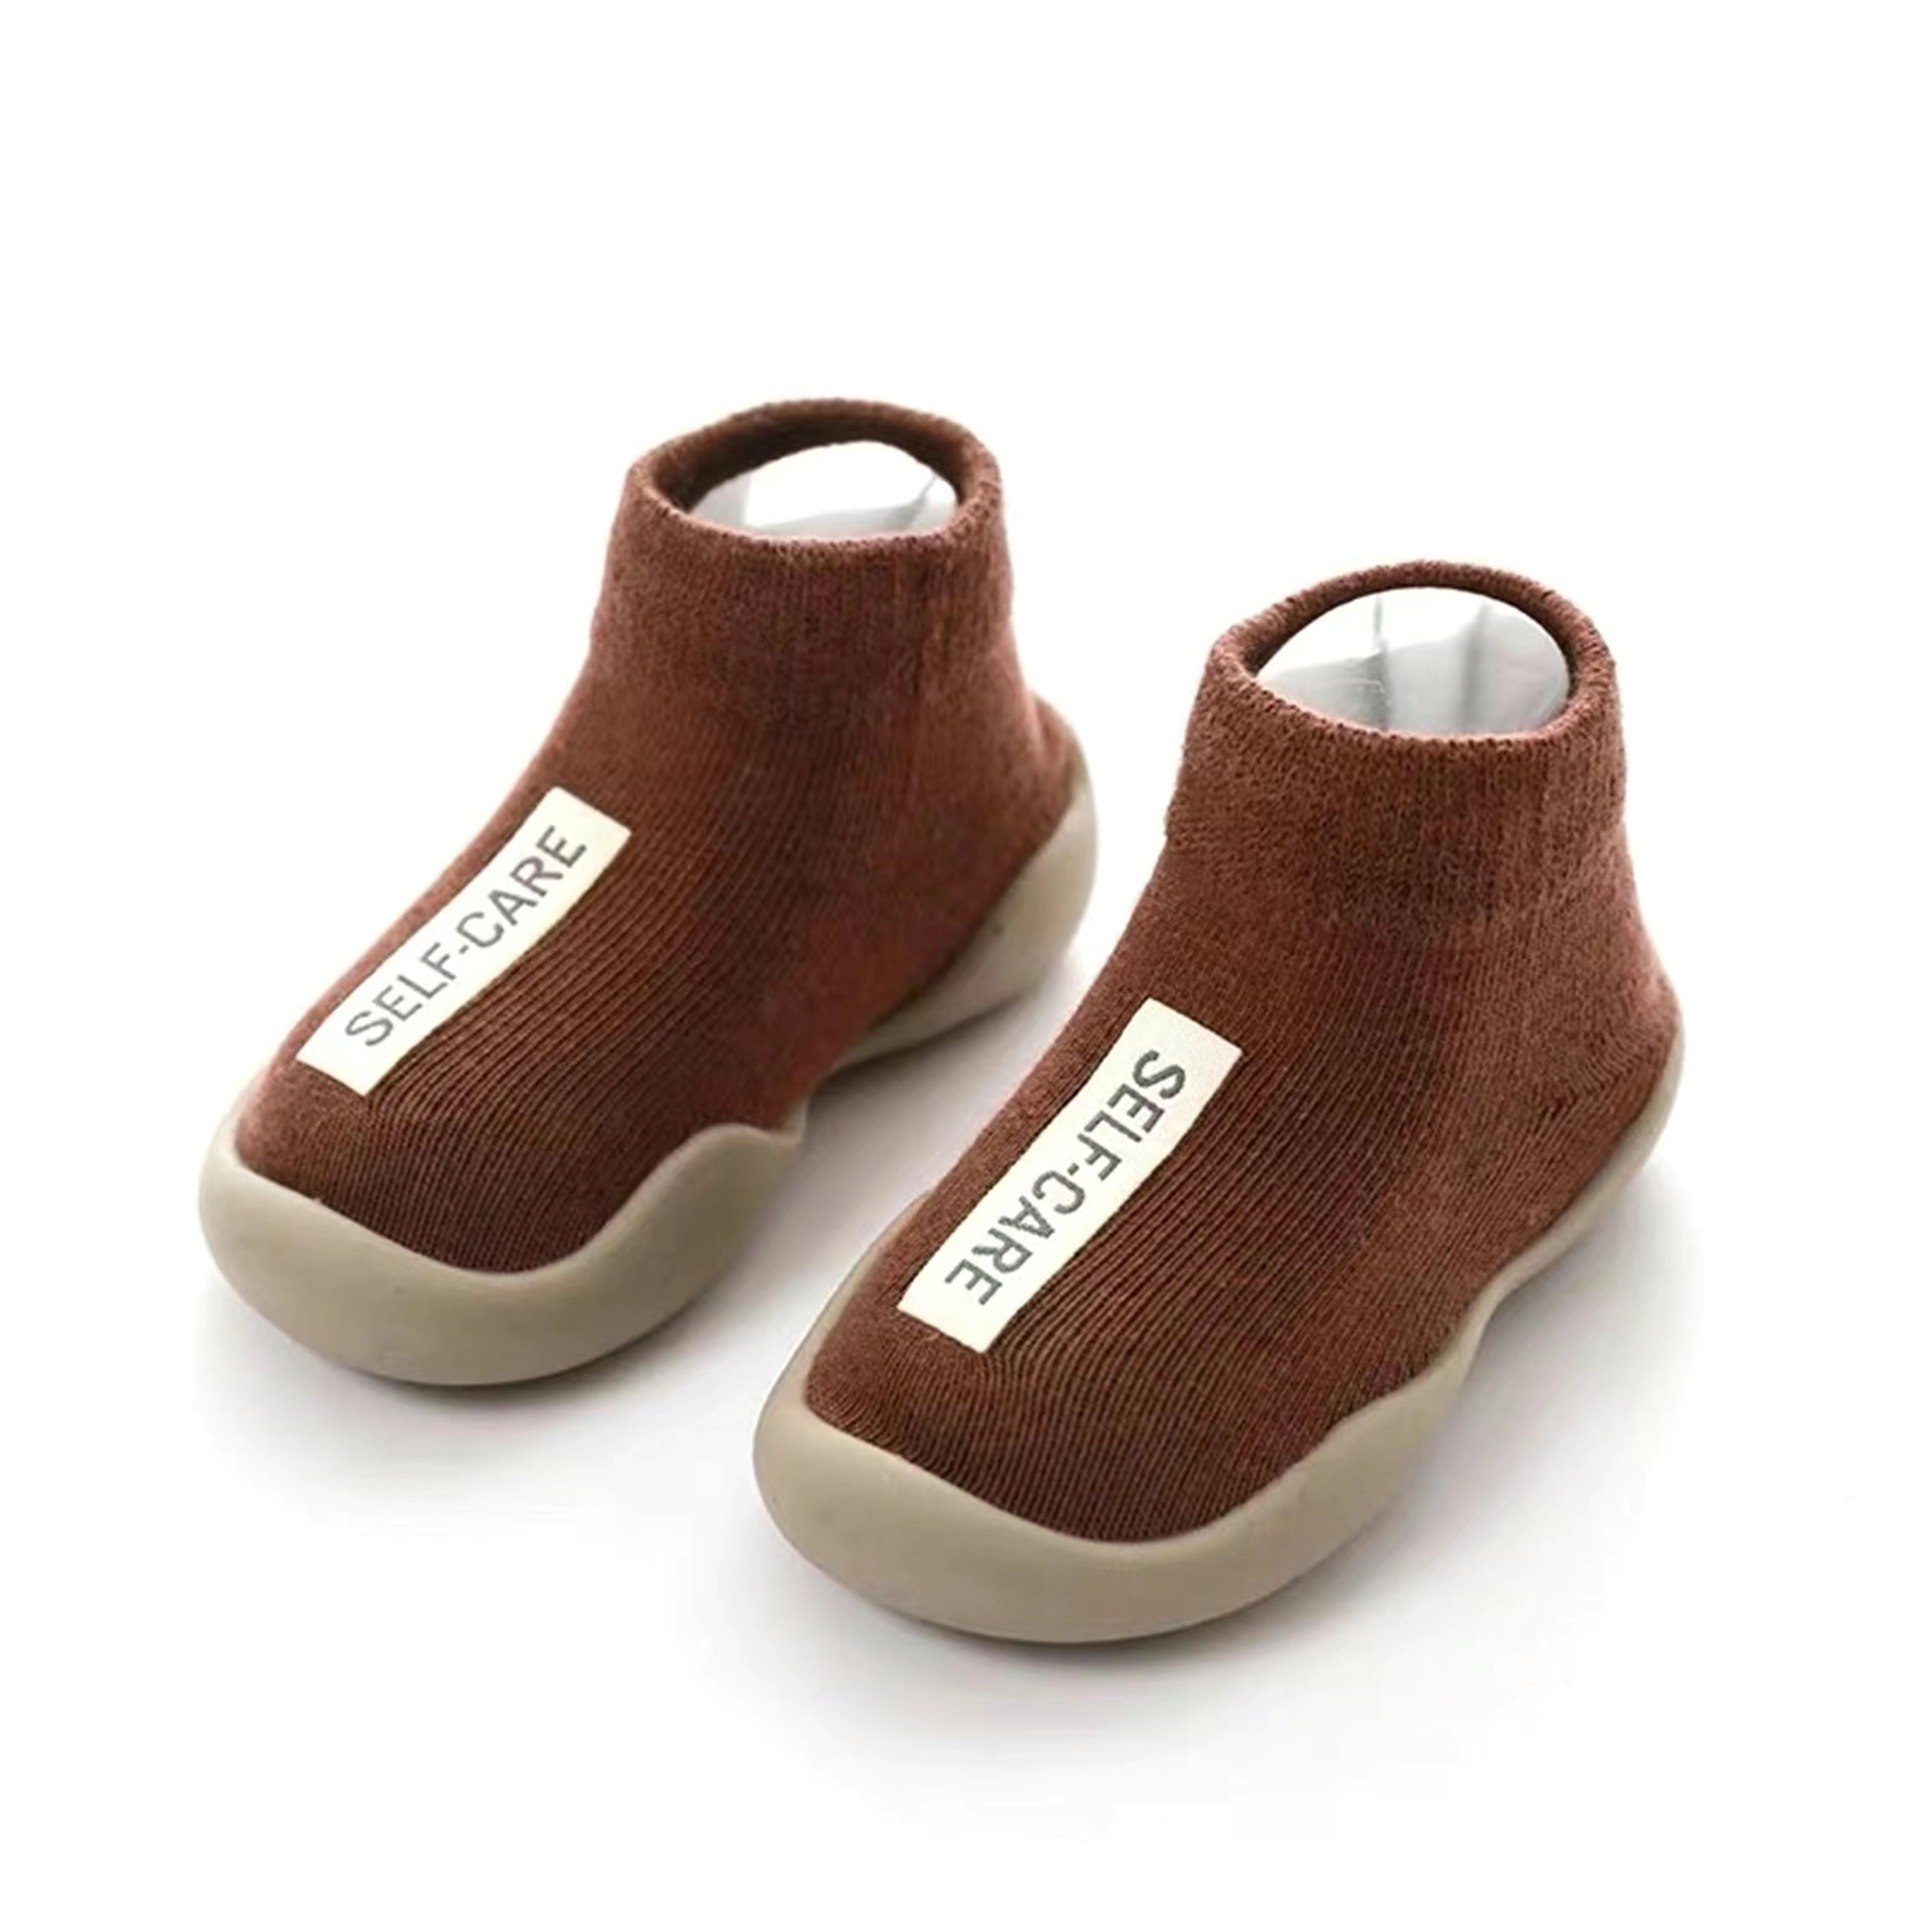 Baby anti-slip shoe socks - Les Value